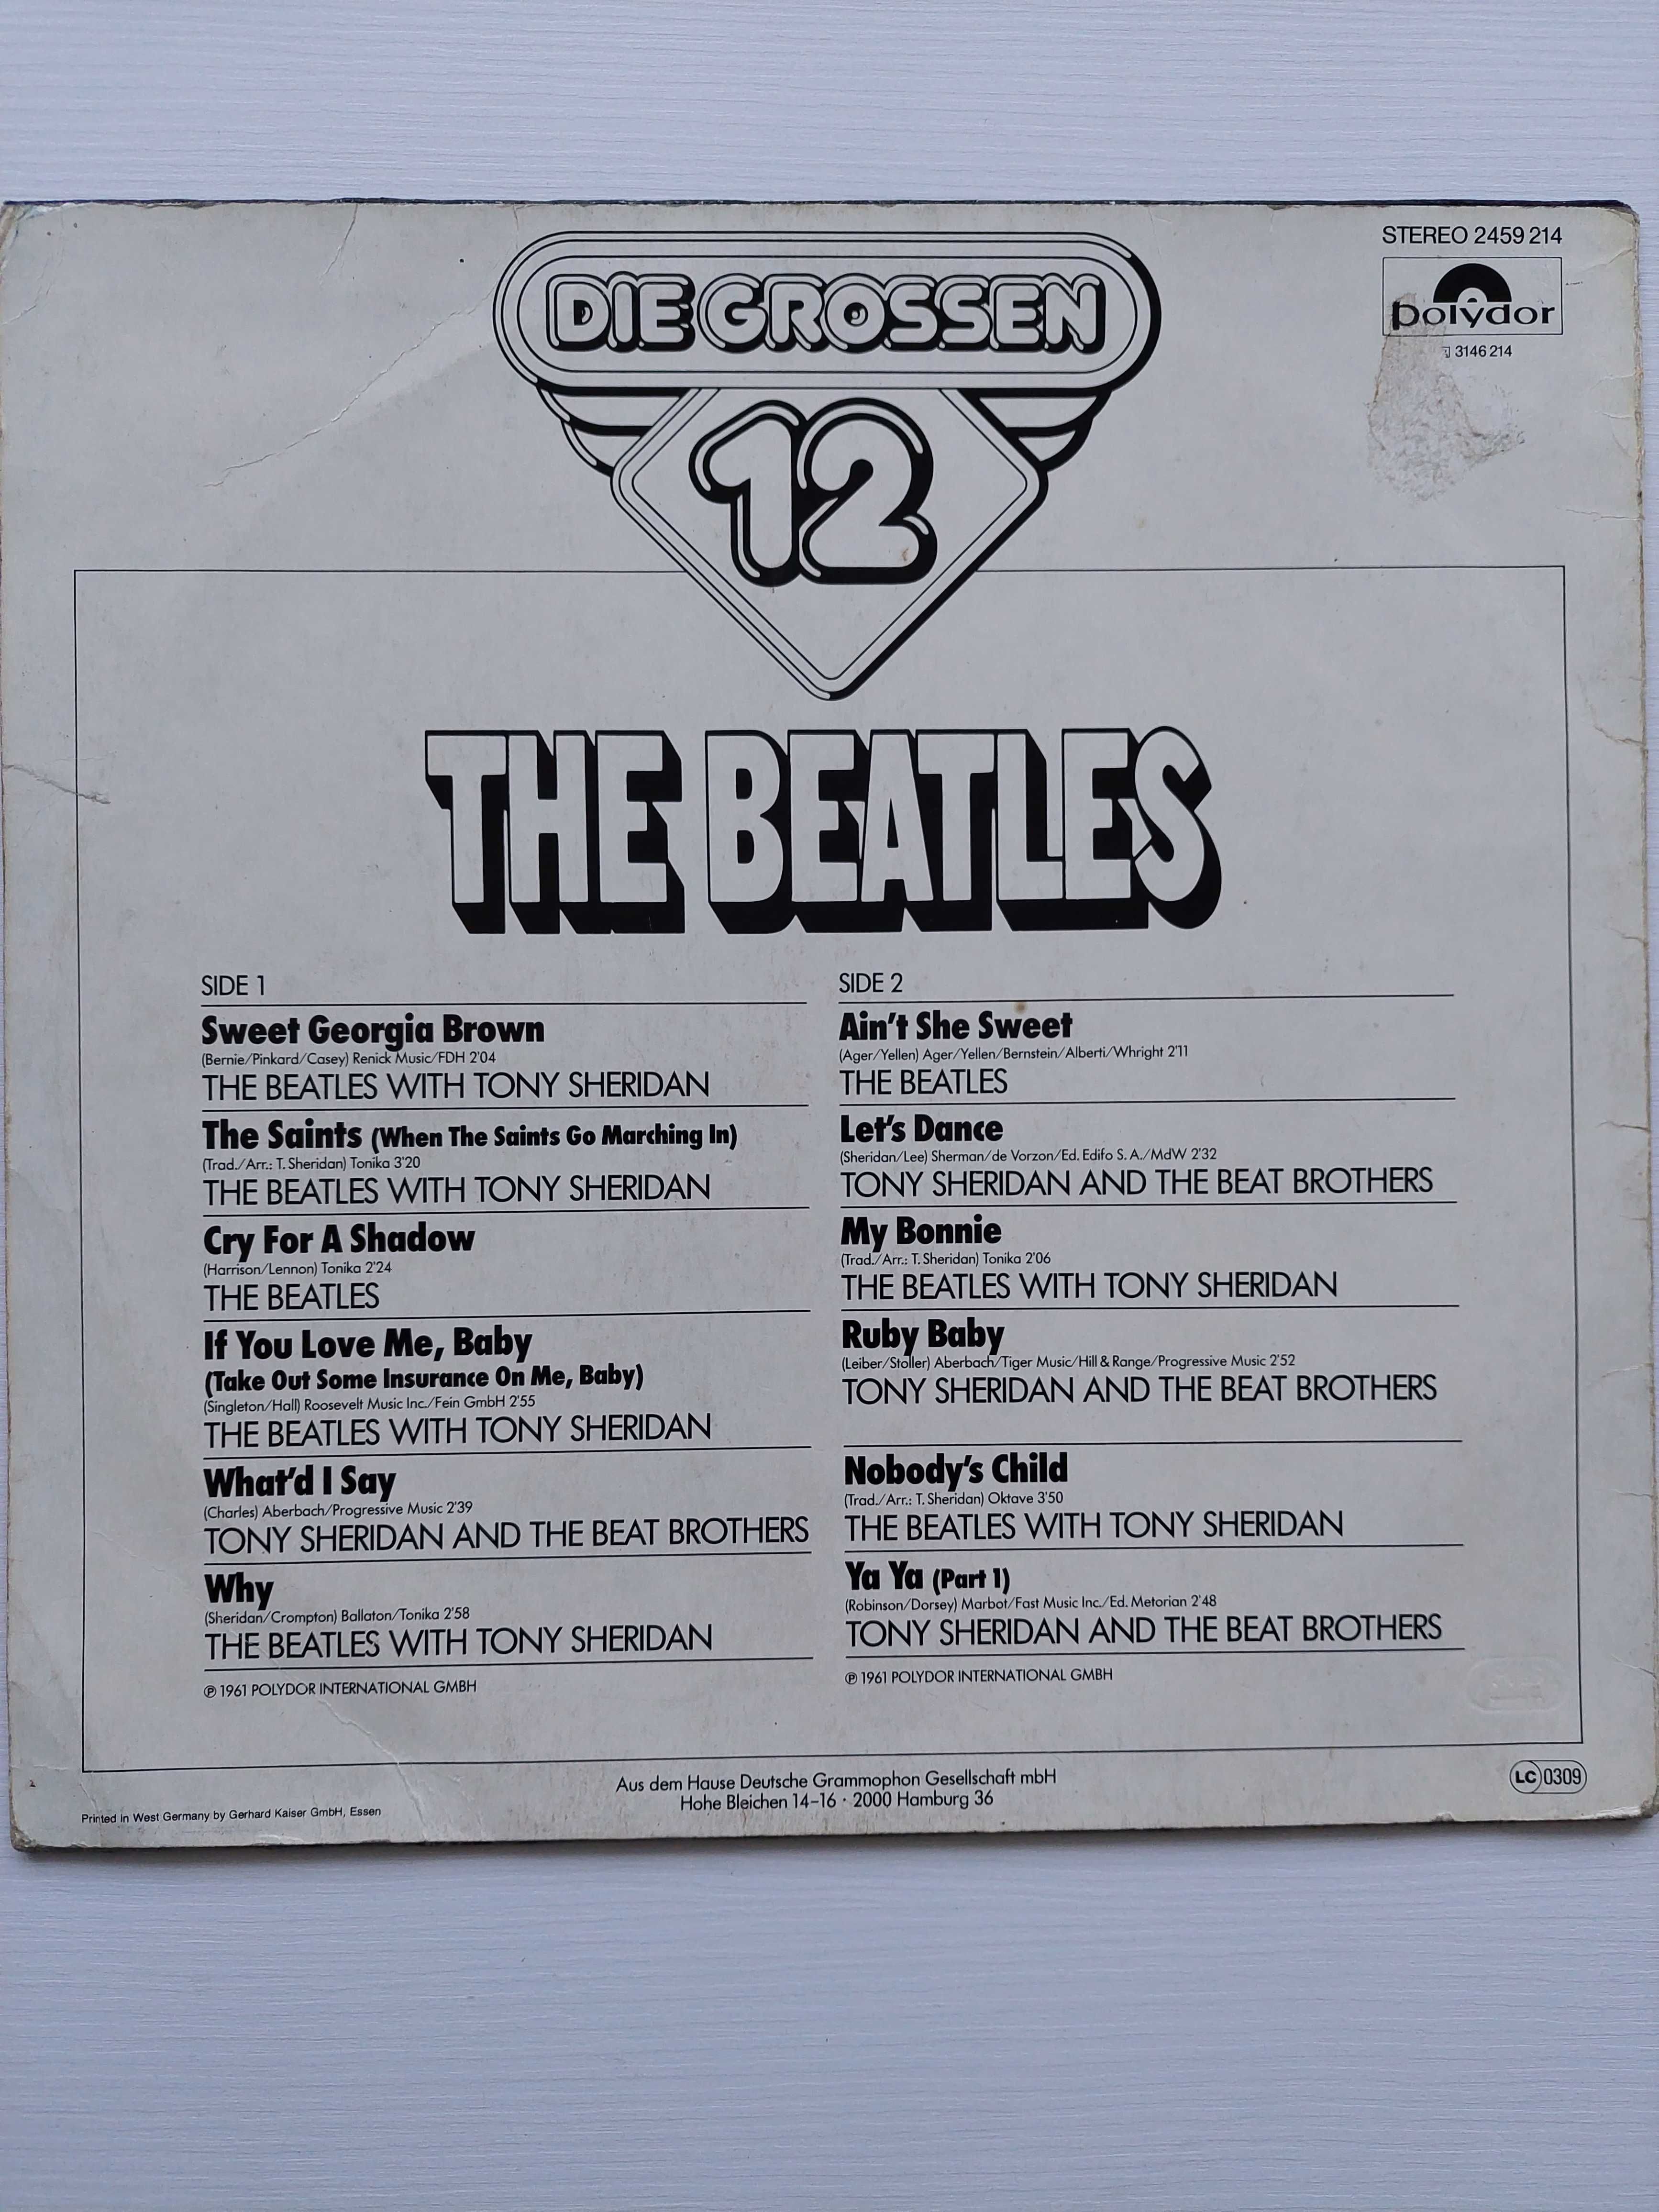 Платівка (вініл) Beatles “Die Grossen 12”, 1961